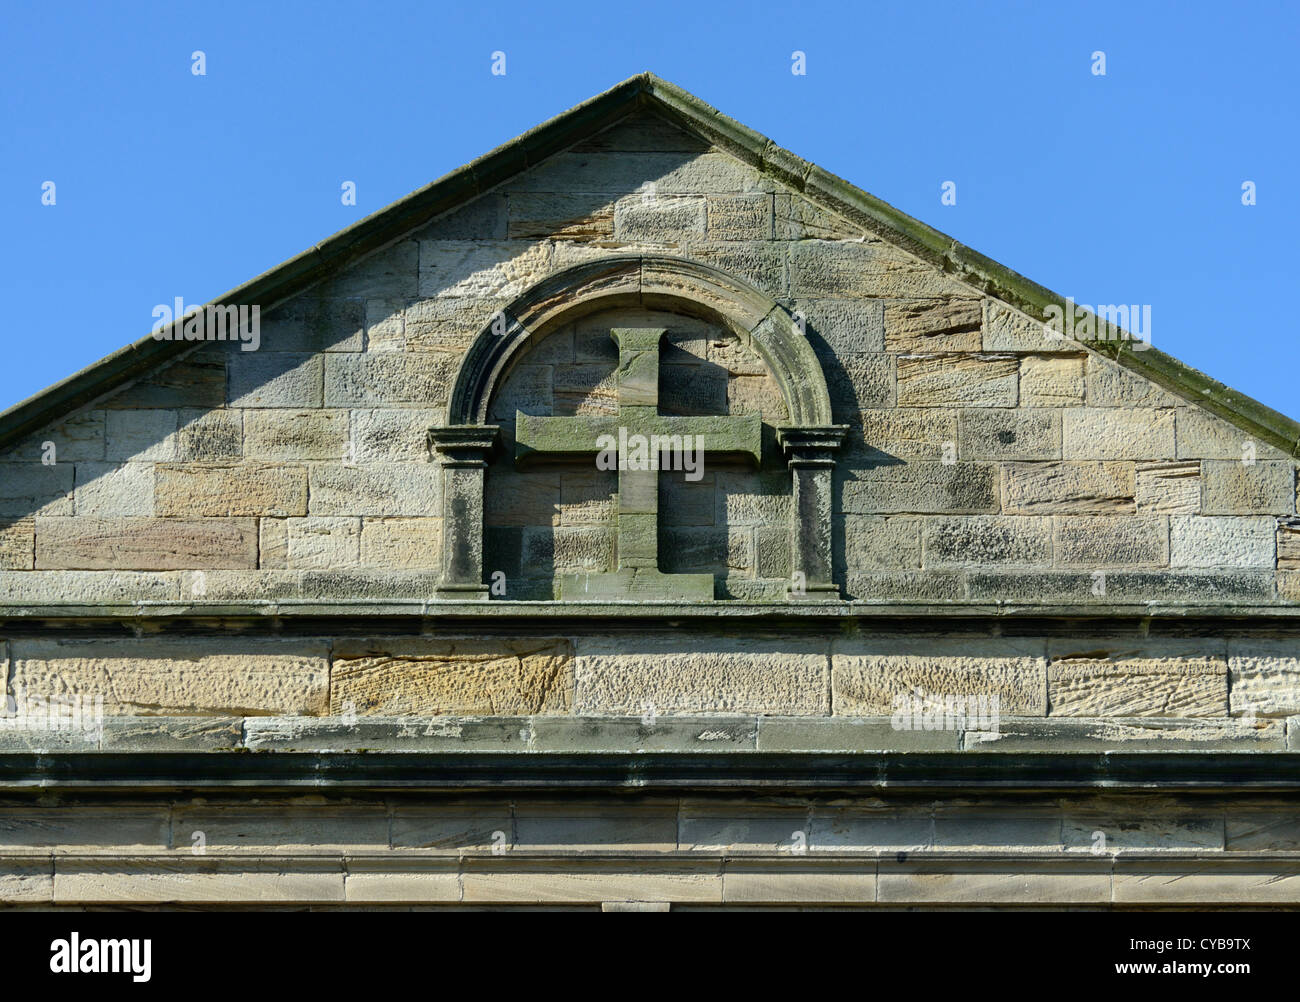 Tympanum with round arch and cross design. Church of Saint Bridget. Moresby, Cumbria, England, United Kingdom, Europe. Stock Photo